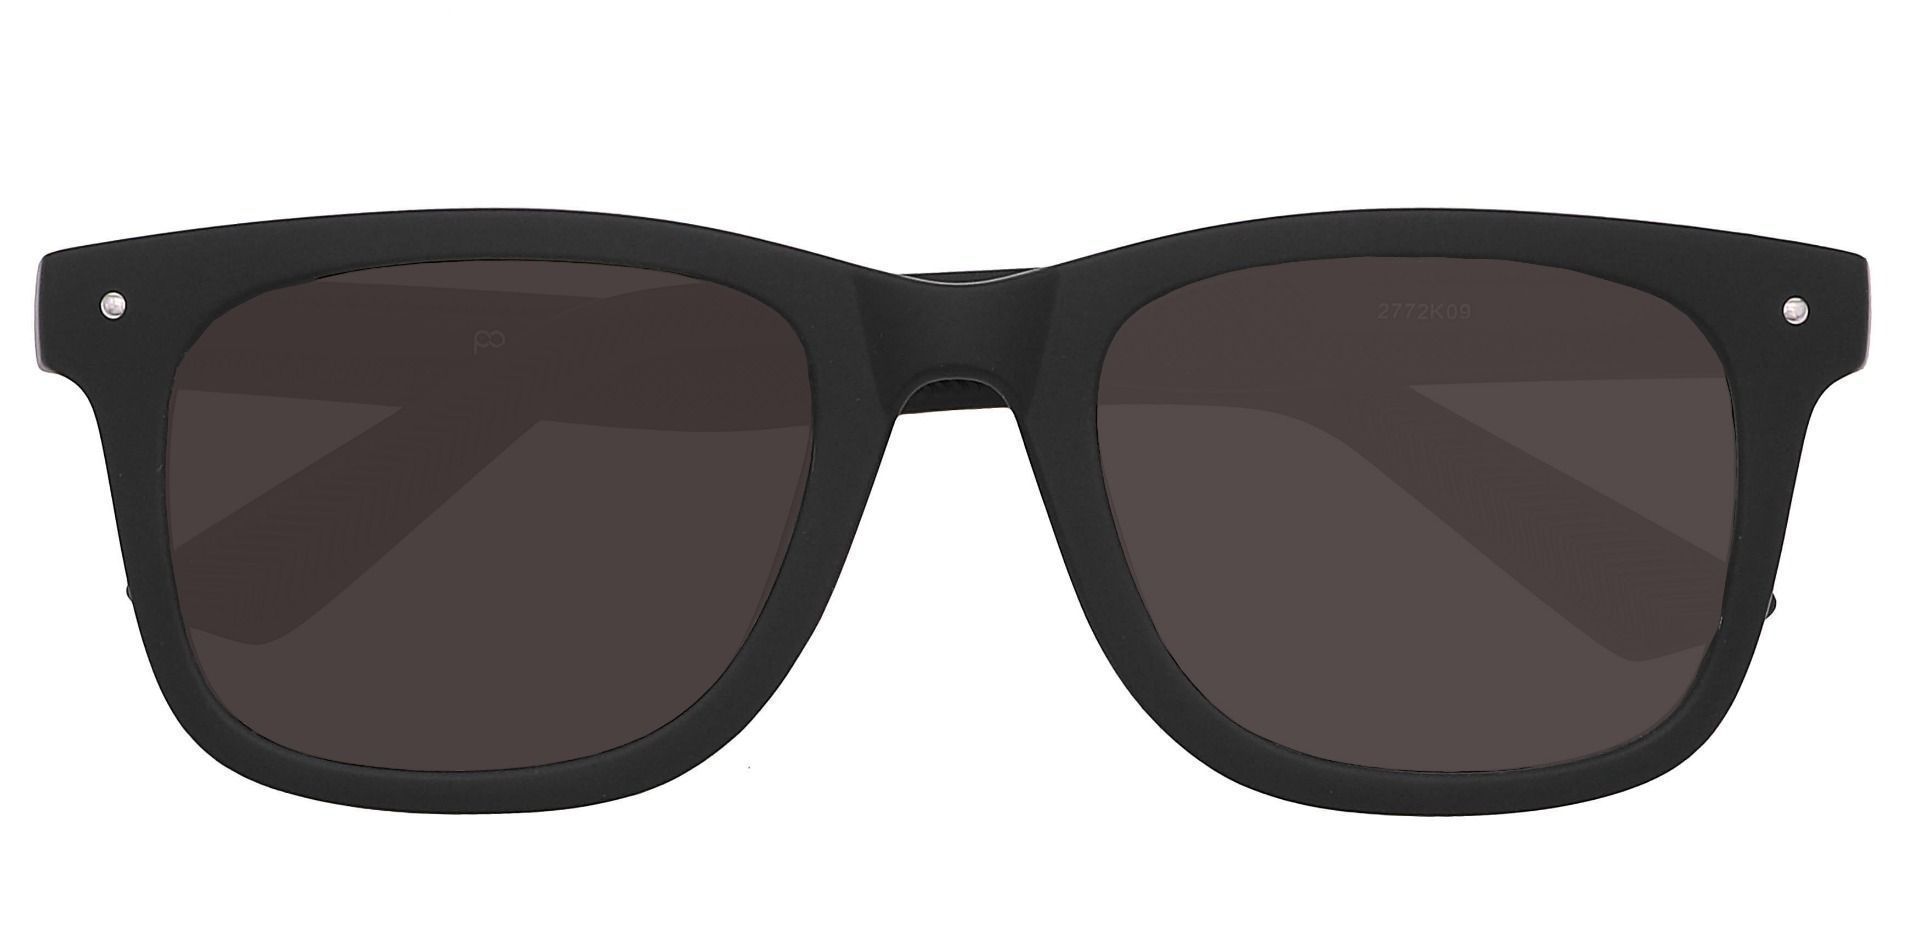 McKinley Square Non-Rx Sunglasses - Black Frame With Gray Lenses